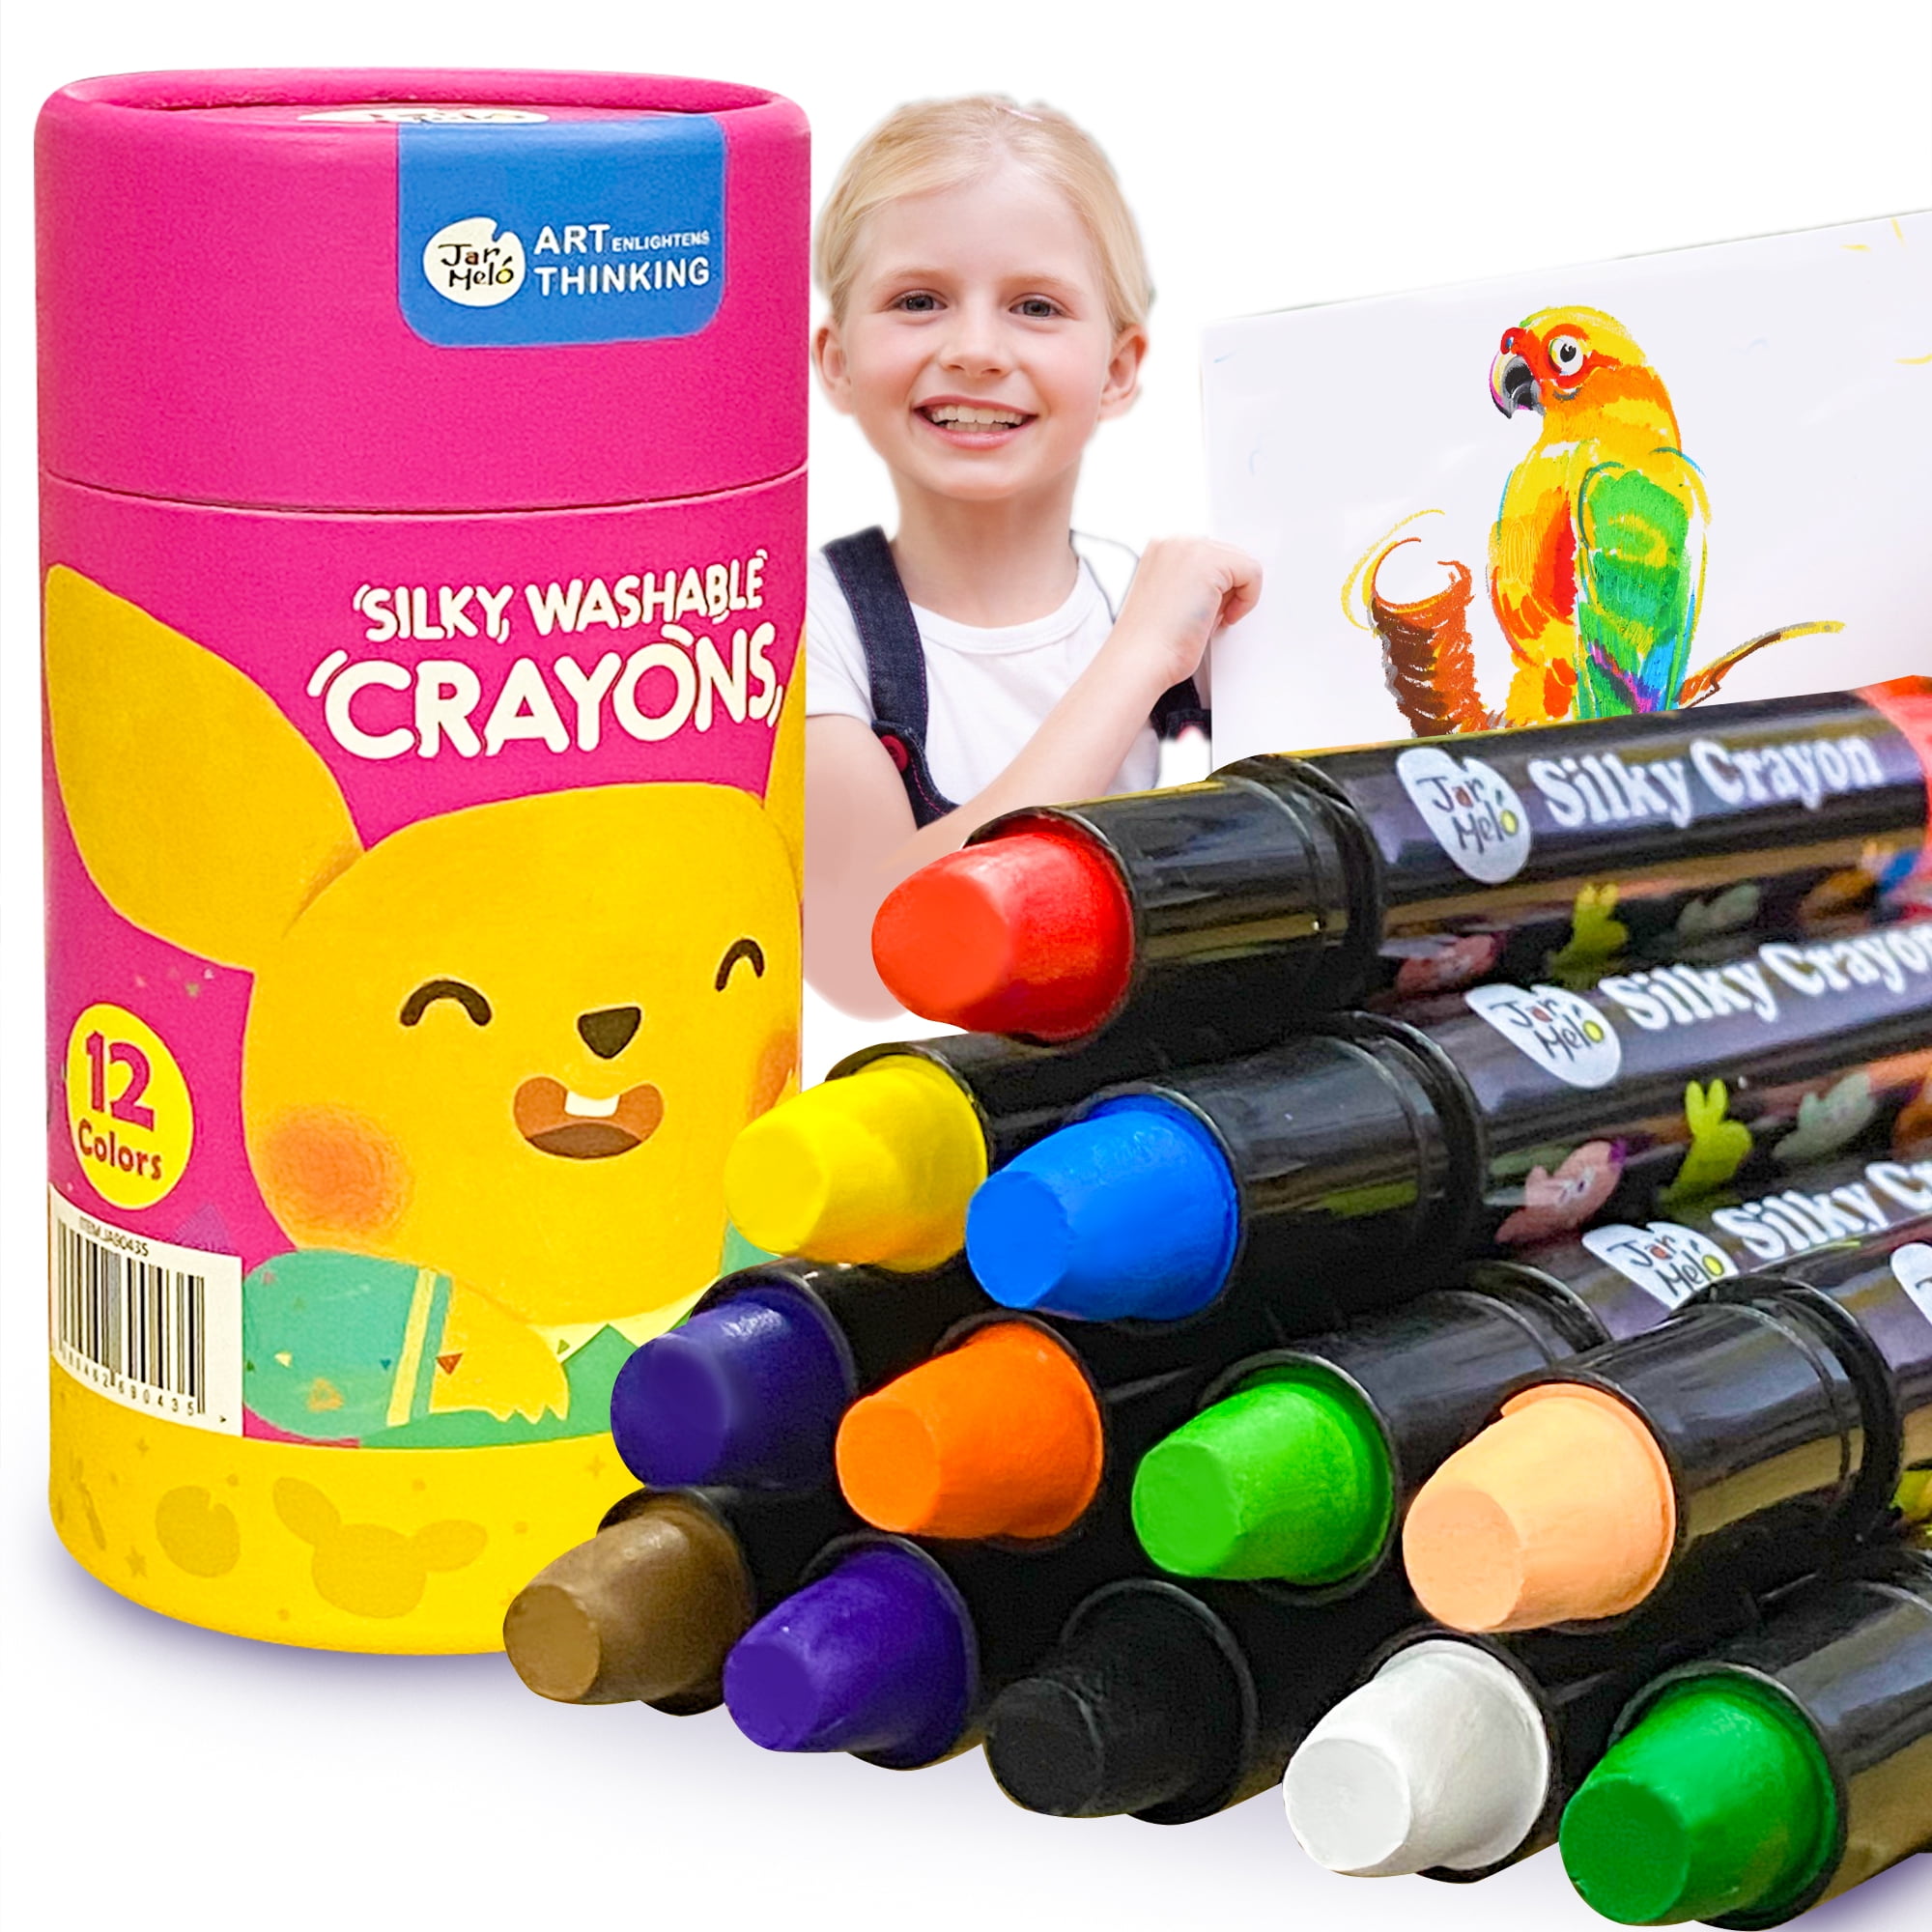 Lockermate Crayon Box, Clear, 1 Count 